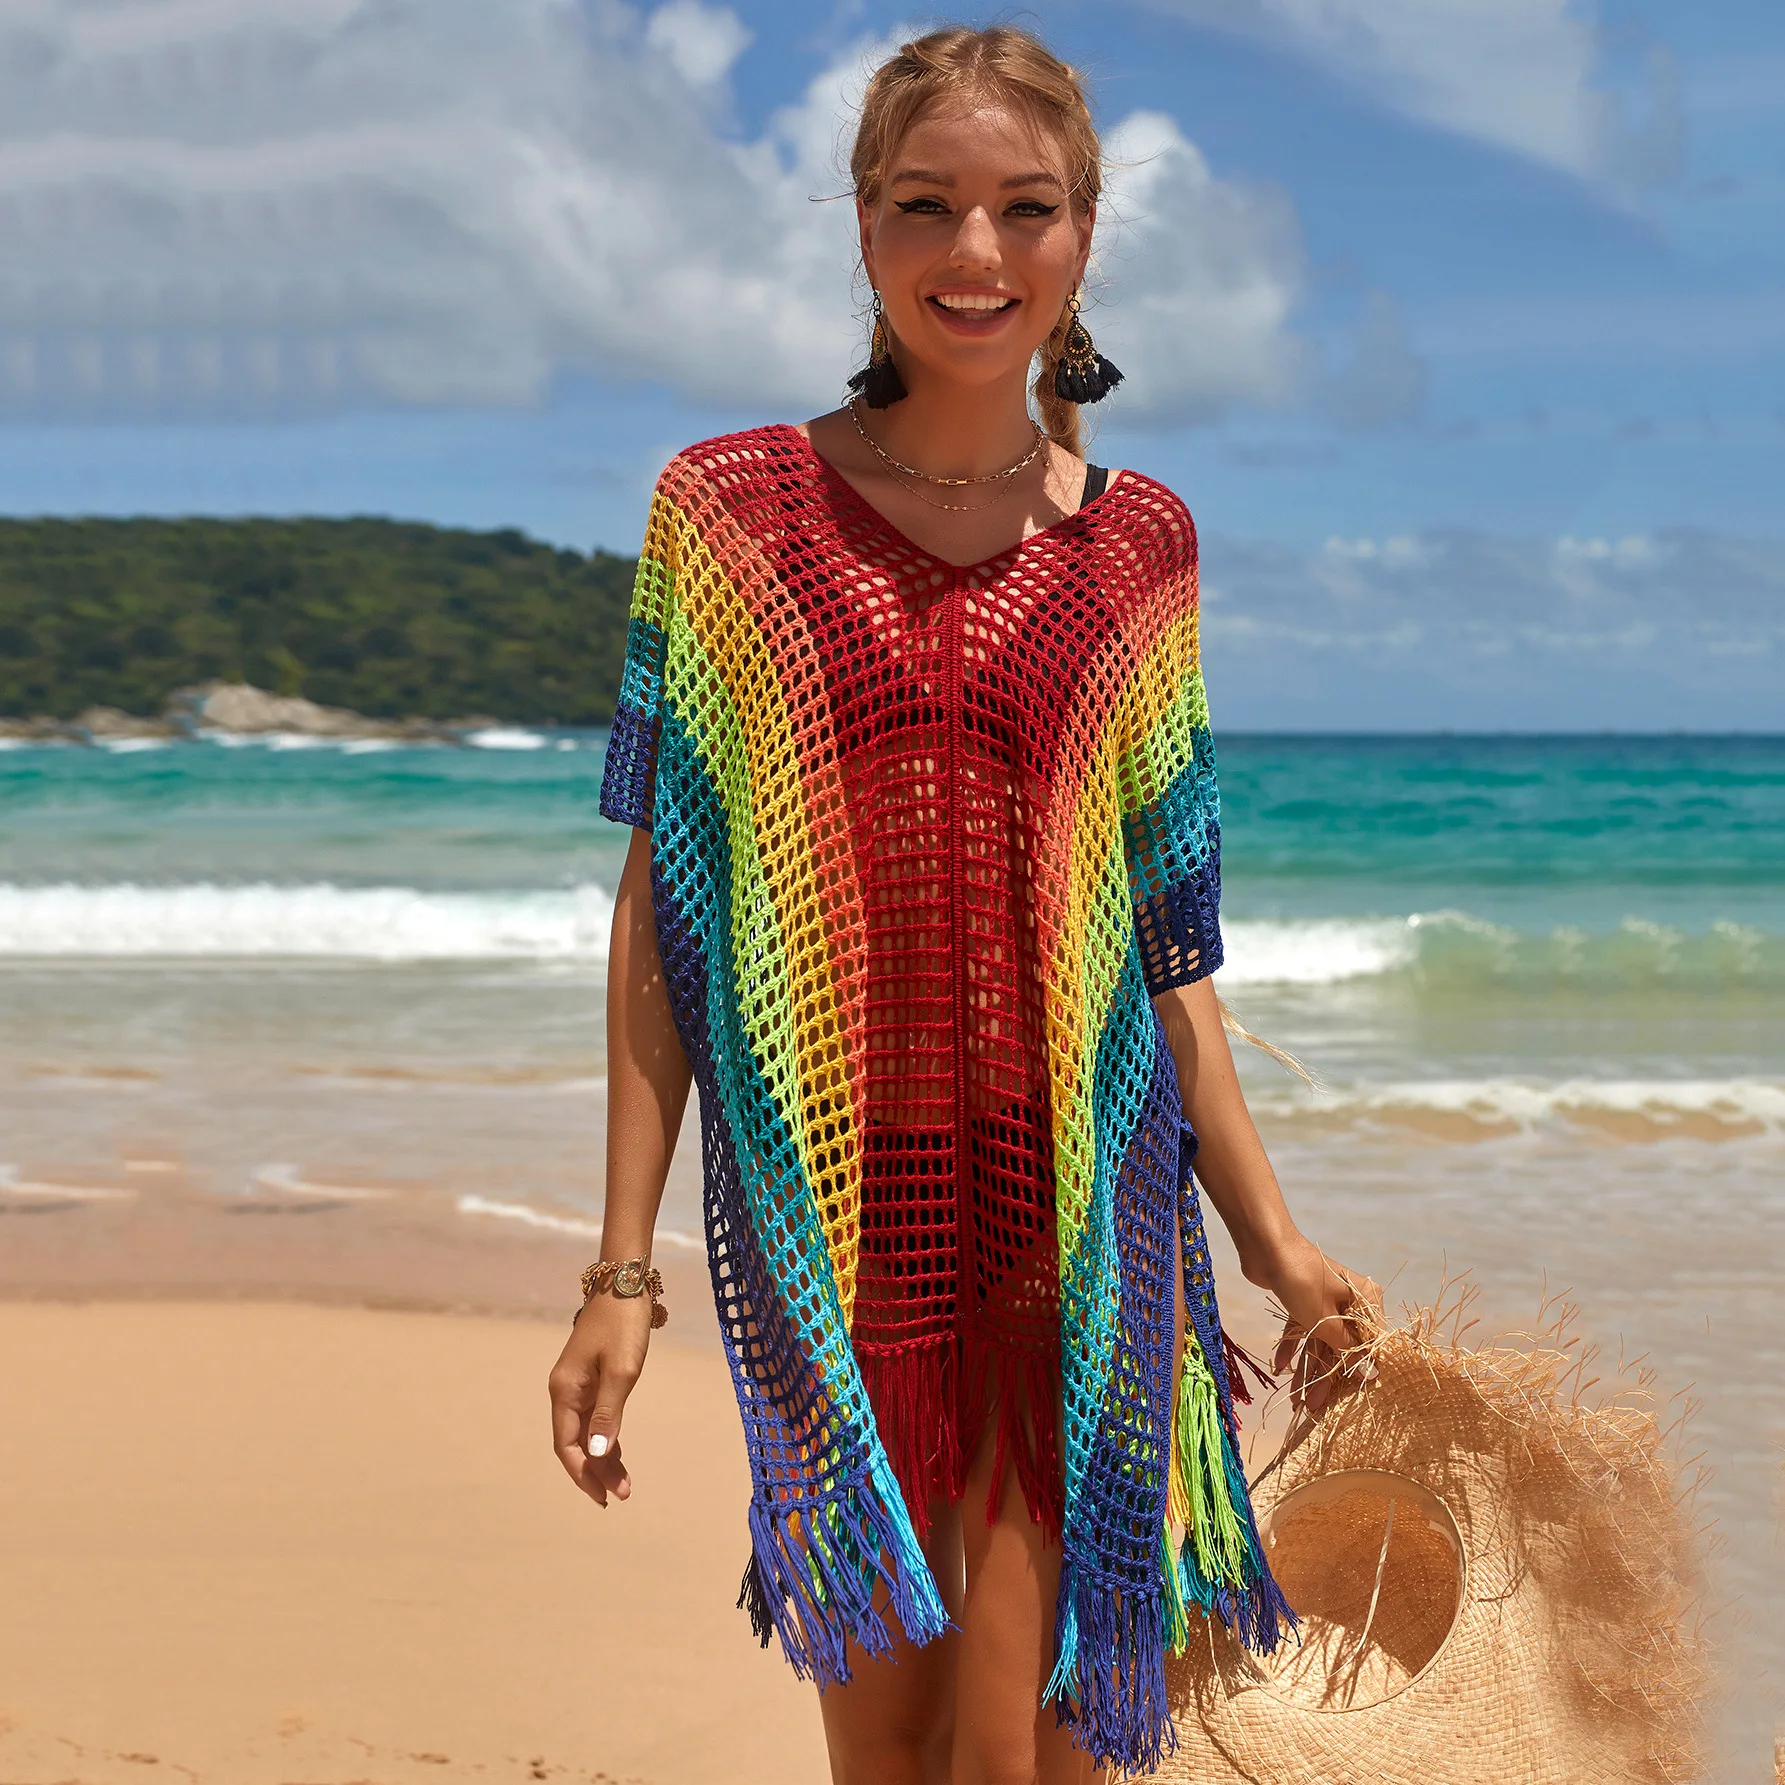 

Crochet Beach rainbow Dress Open Back Beach Coverup Swimwear Sexy Pijamas Women Sexy Beach Wear Swimsuit Cover Up Vacation Outfi